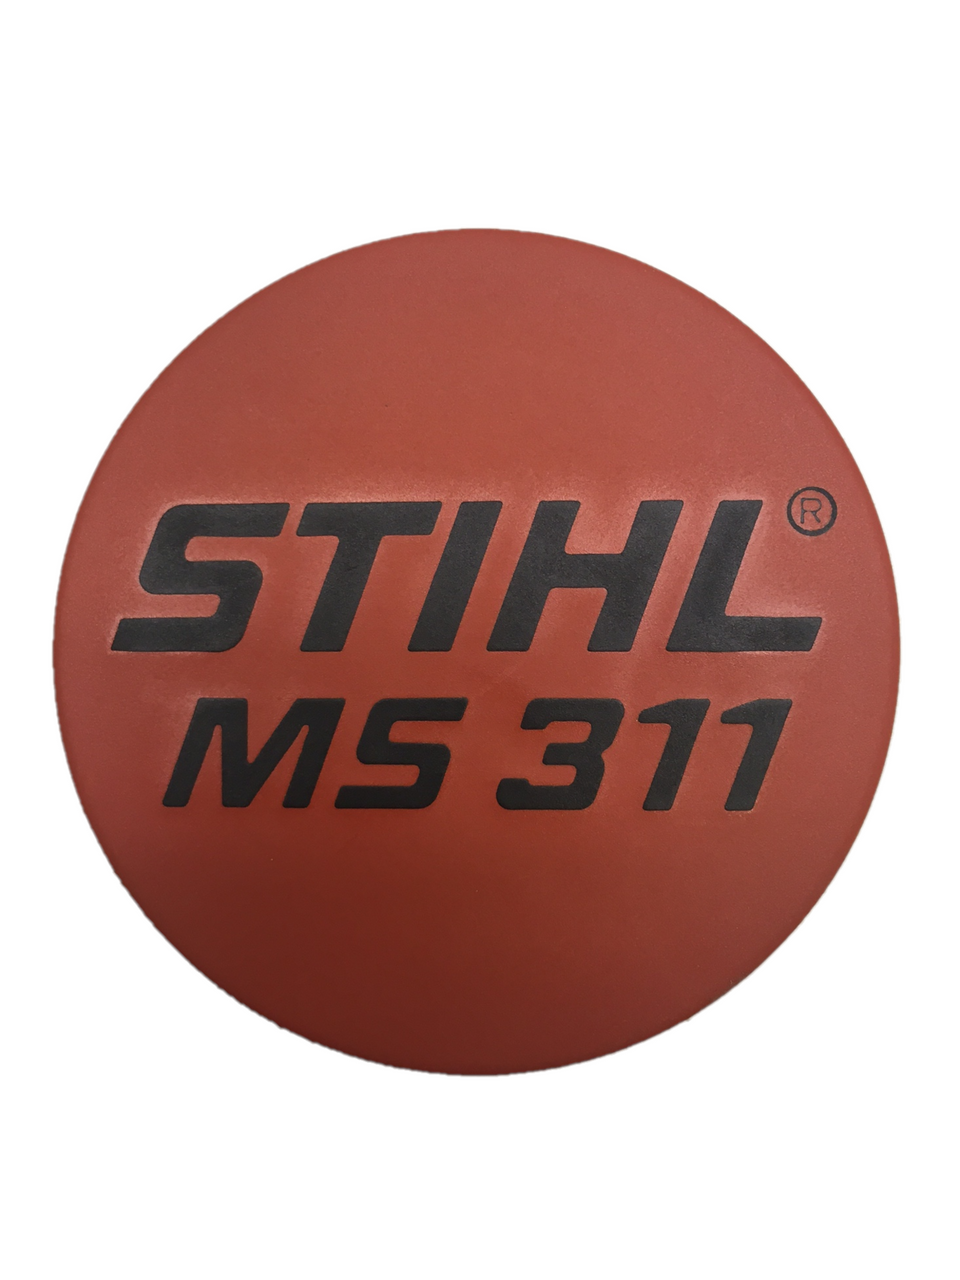 Stihl Ms 311 Model Badge Plate New Oem